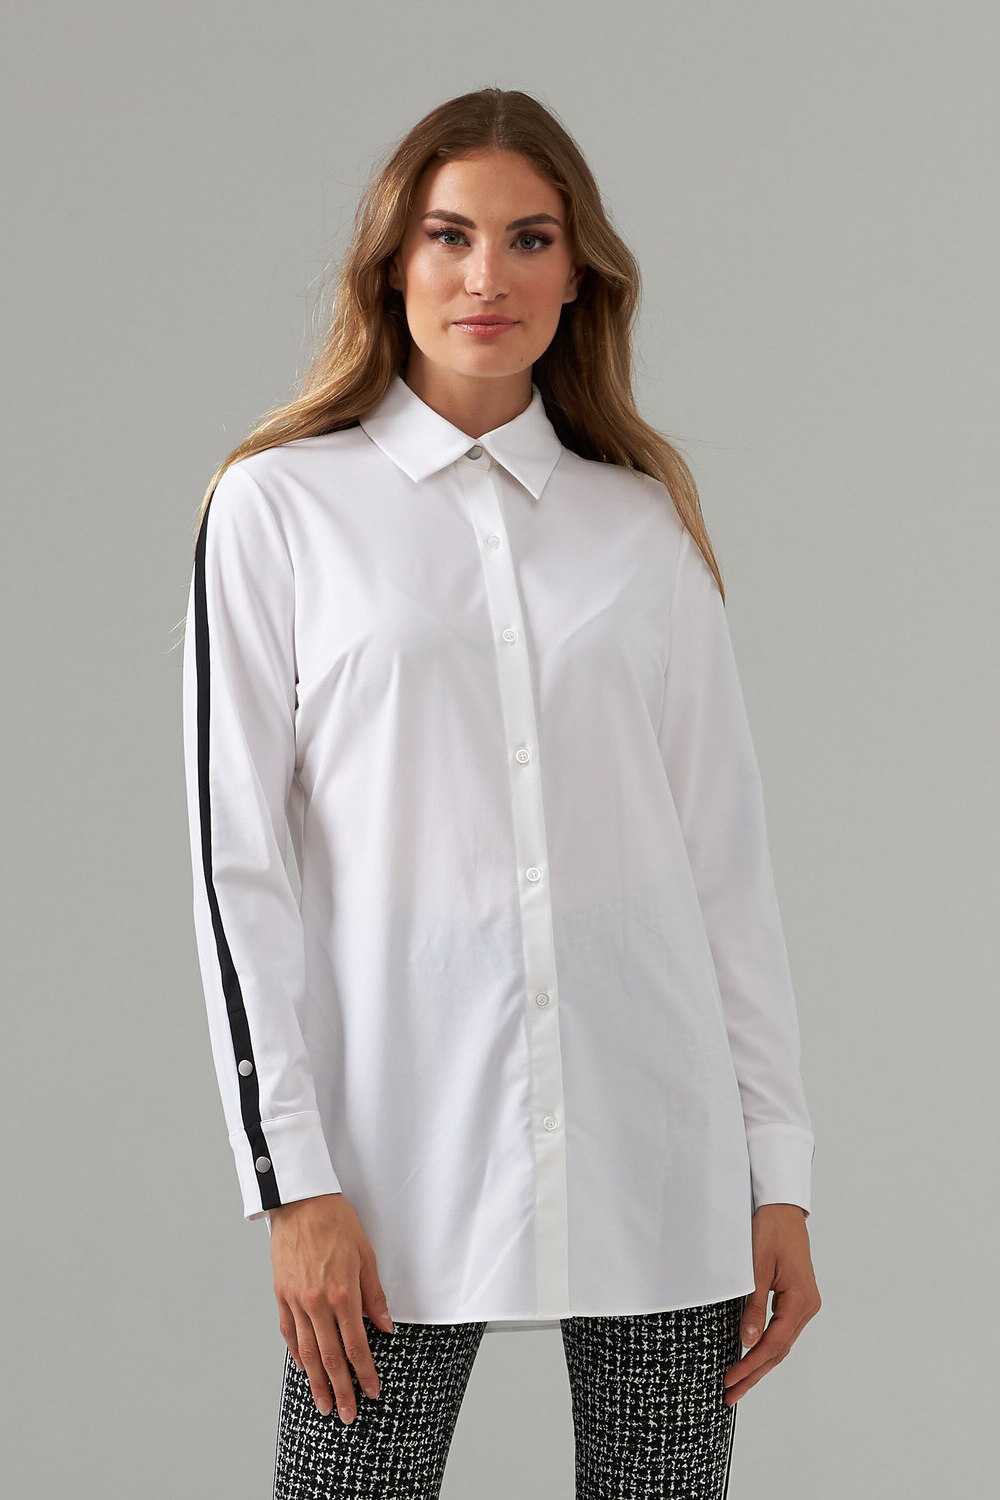 Joseph Ribkoff oversized striped Sleeve shirt style 203086. White/black